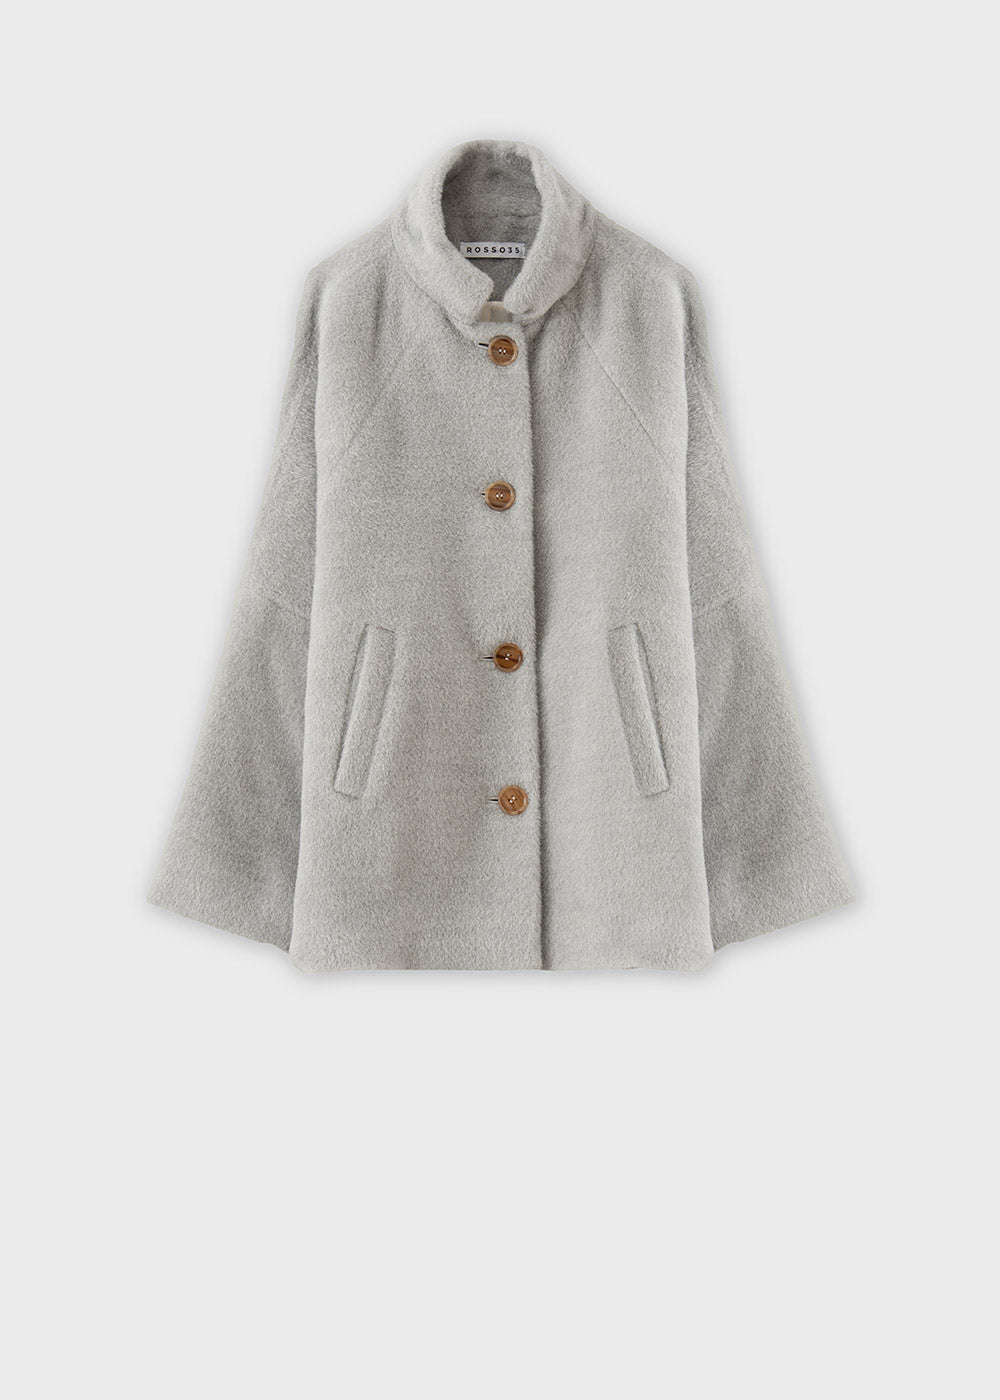 Silver Grey Button Fur Cropped Jacket